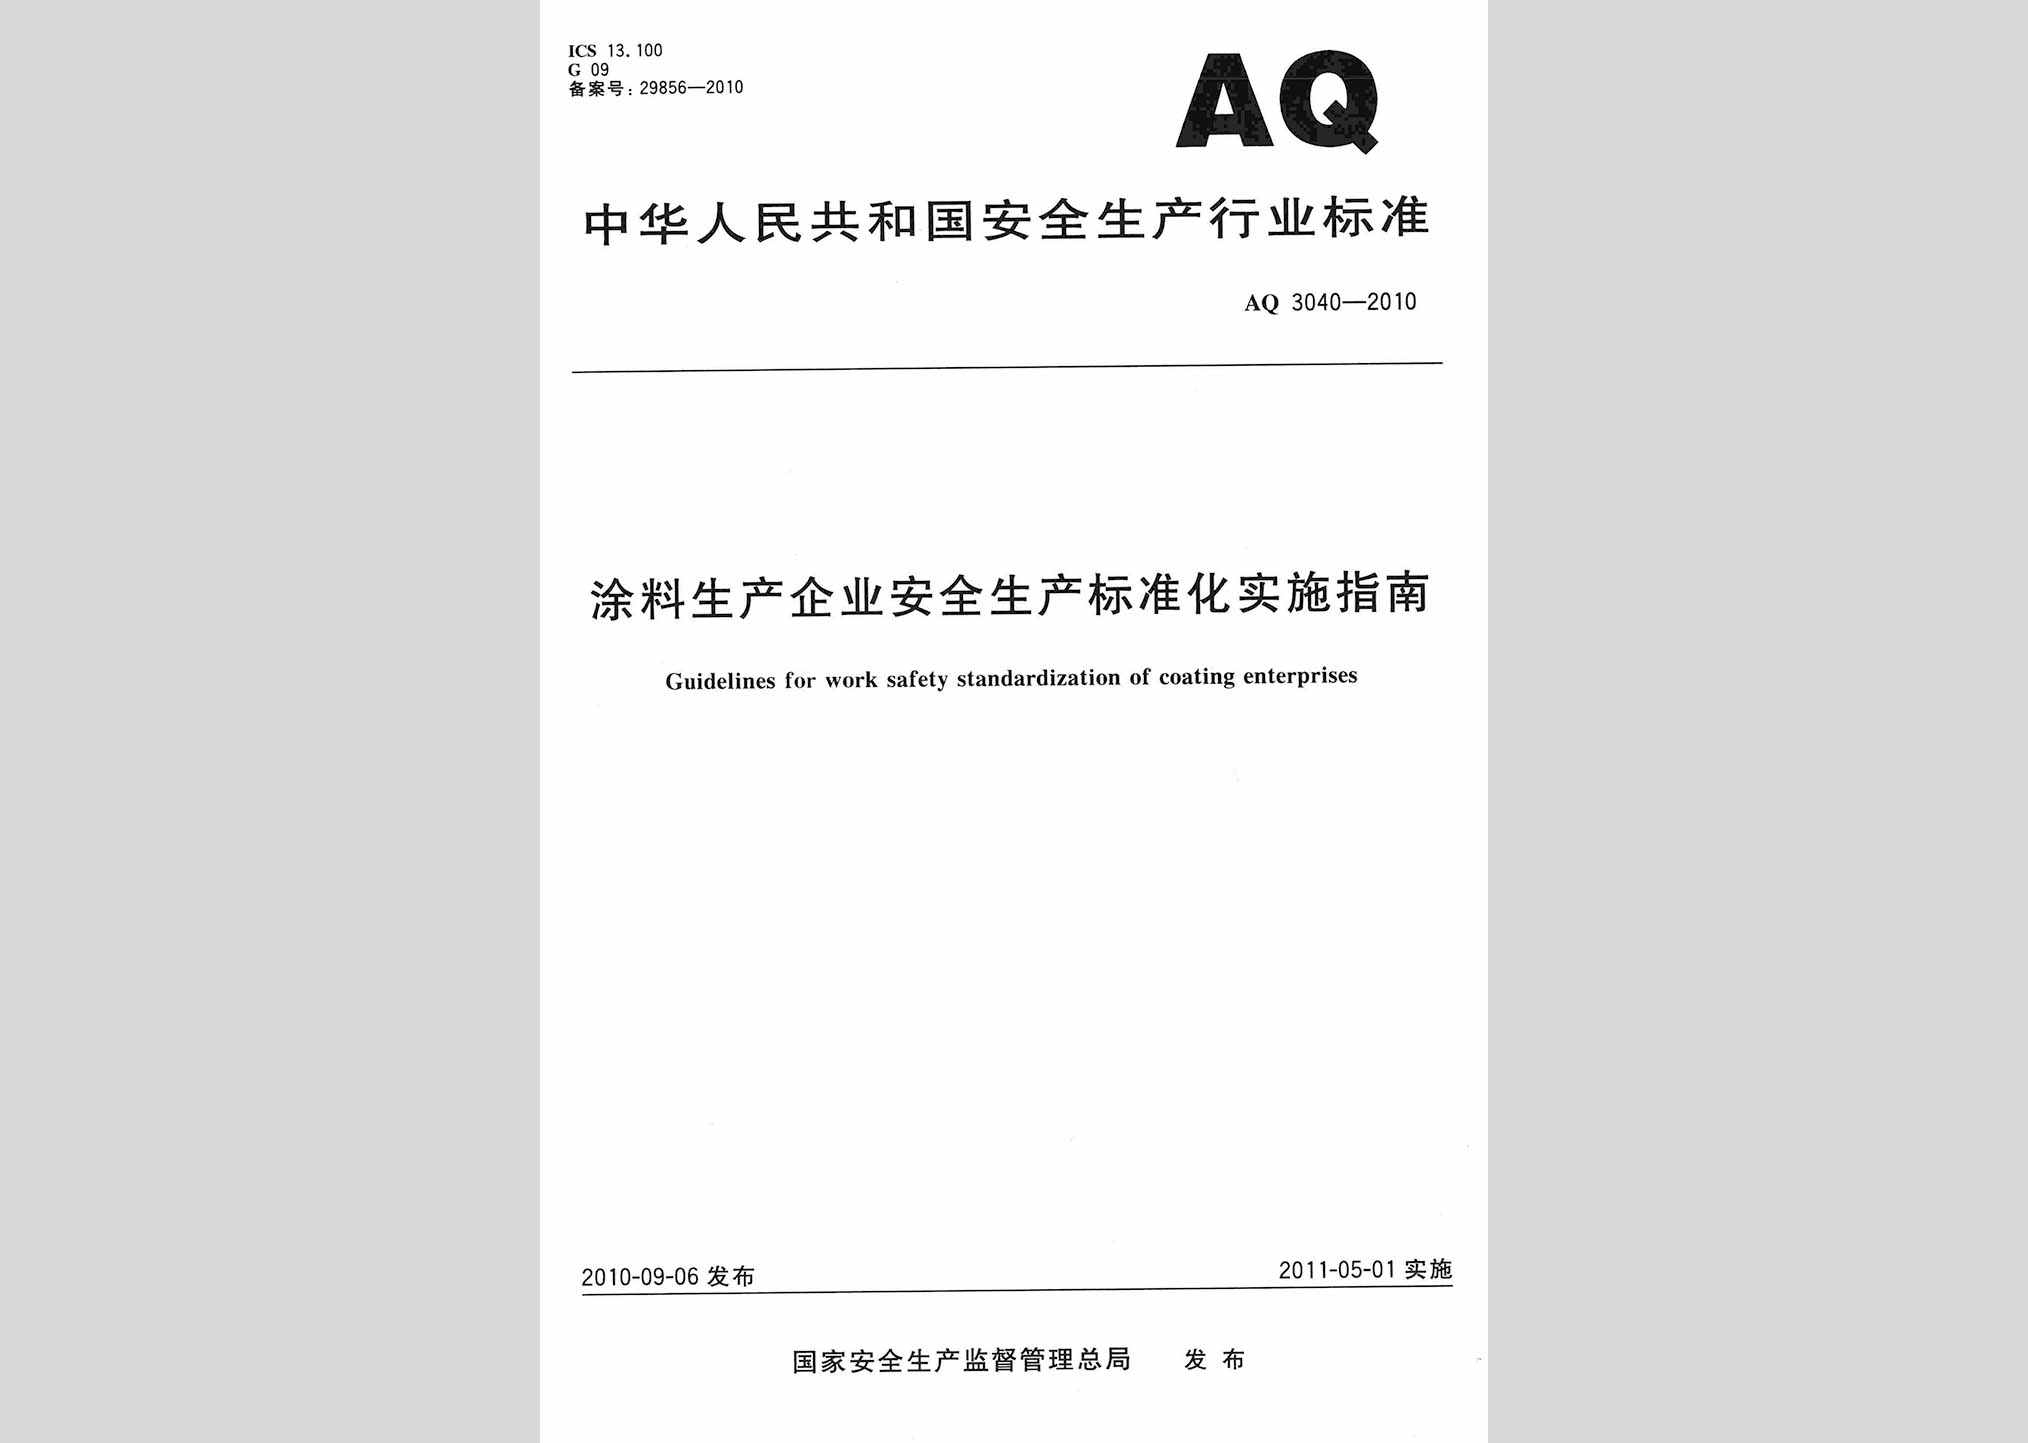 AQ3040-2010：涂料生产企业安全生产标准化实施指南